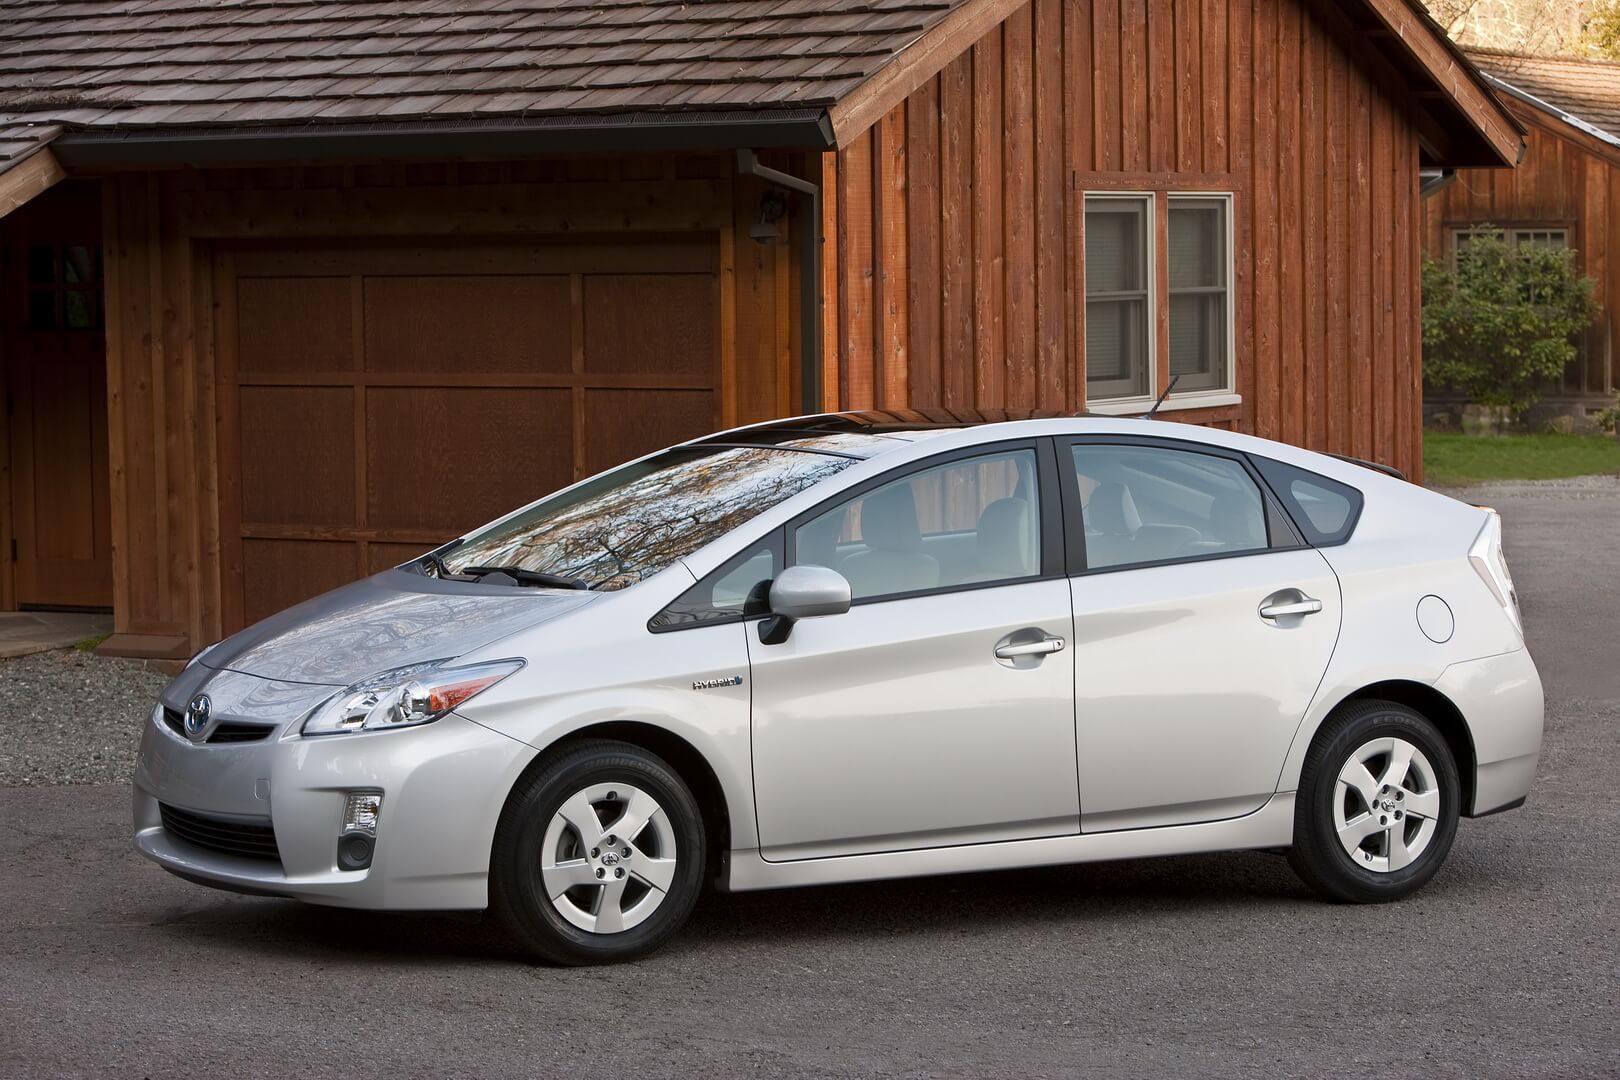 Фотография экоавто Toyota Prius Hybrid 2010 - фото 13